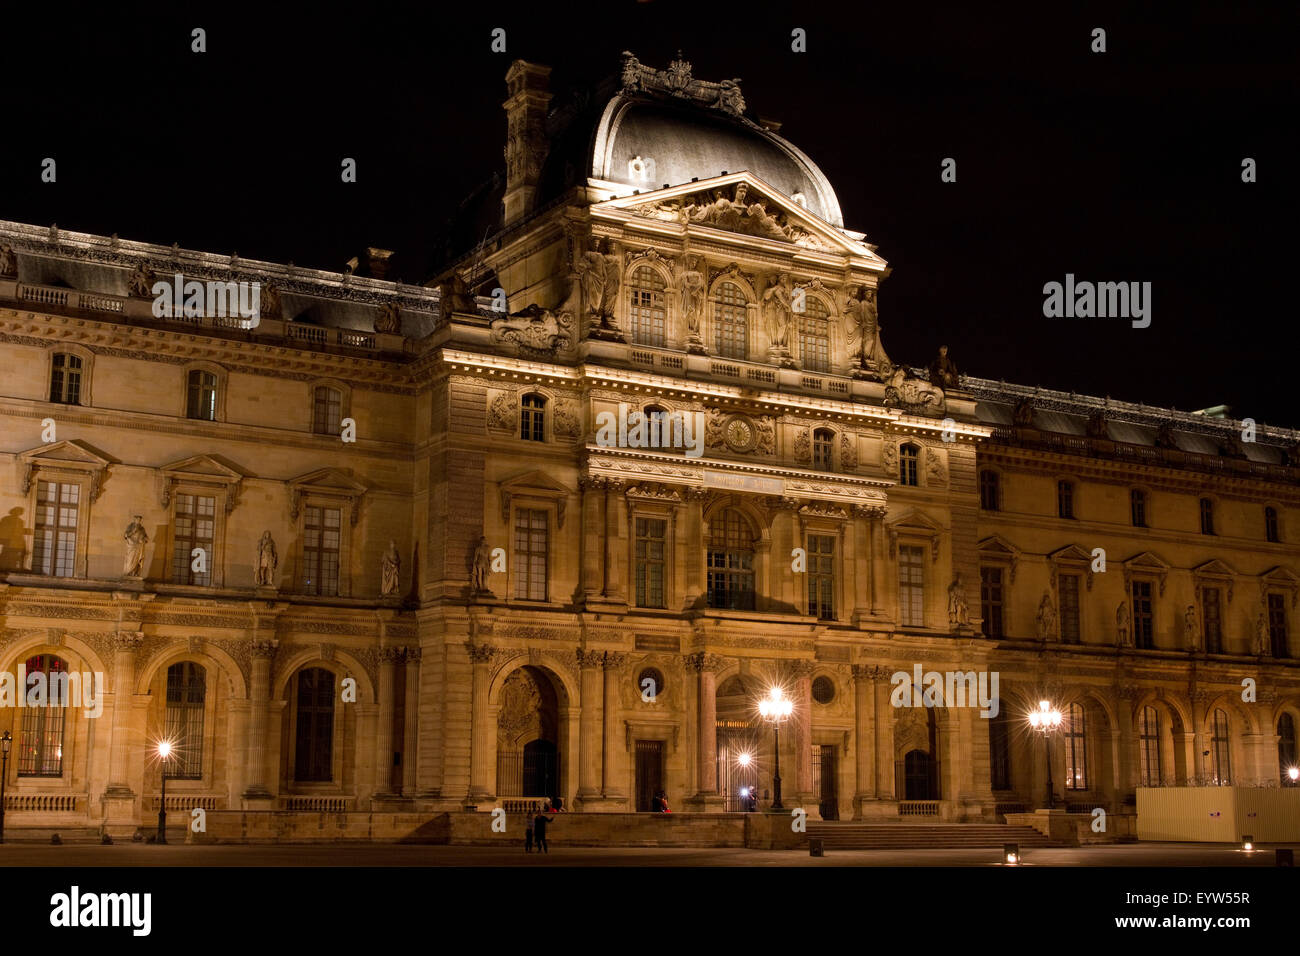 Pavillon Sully of the Louvre Palace (Palais du Louvre). Stock Photo